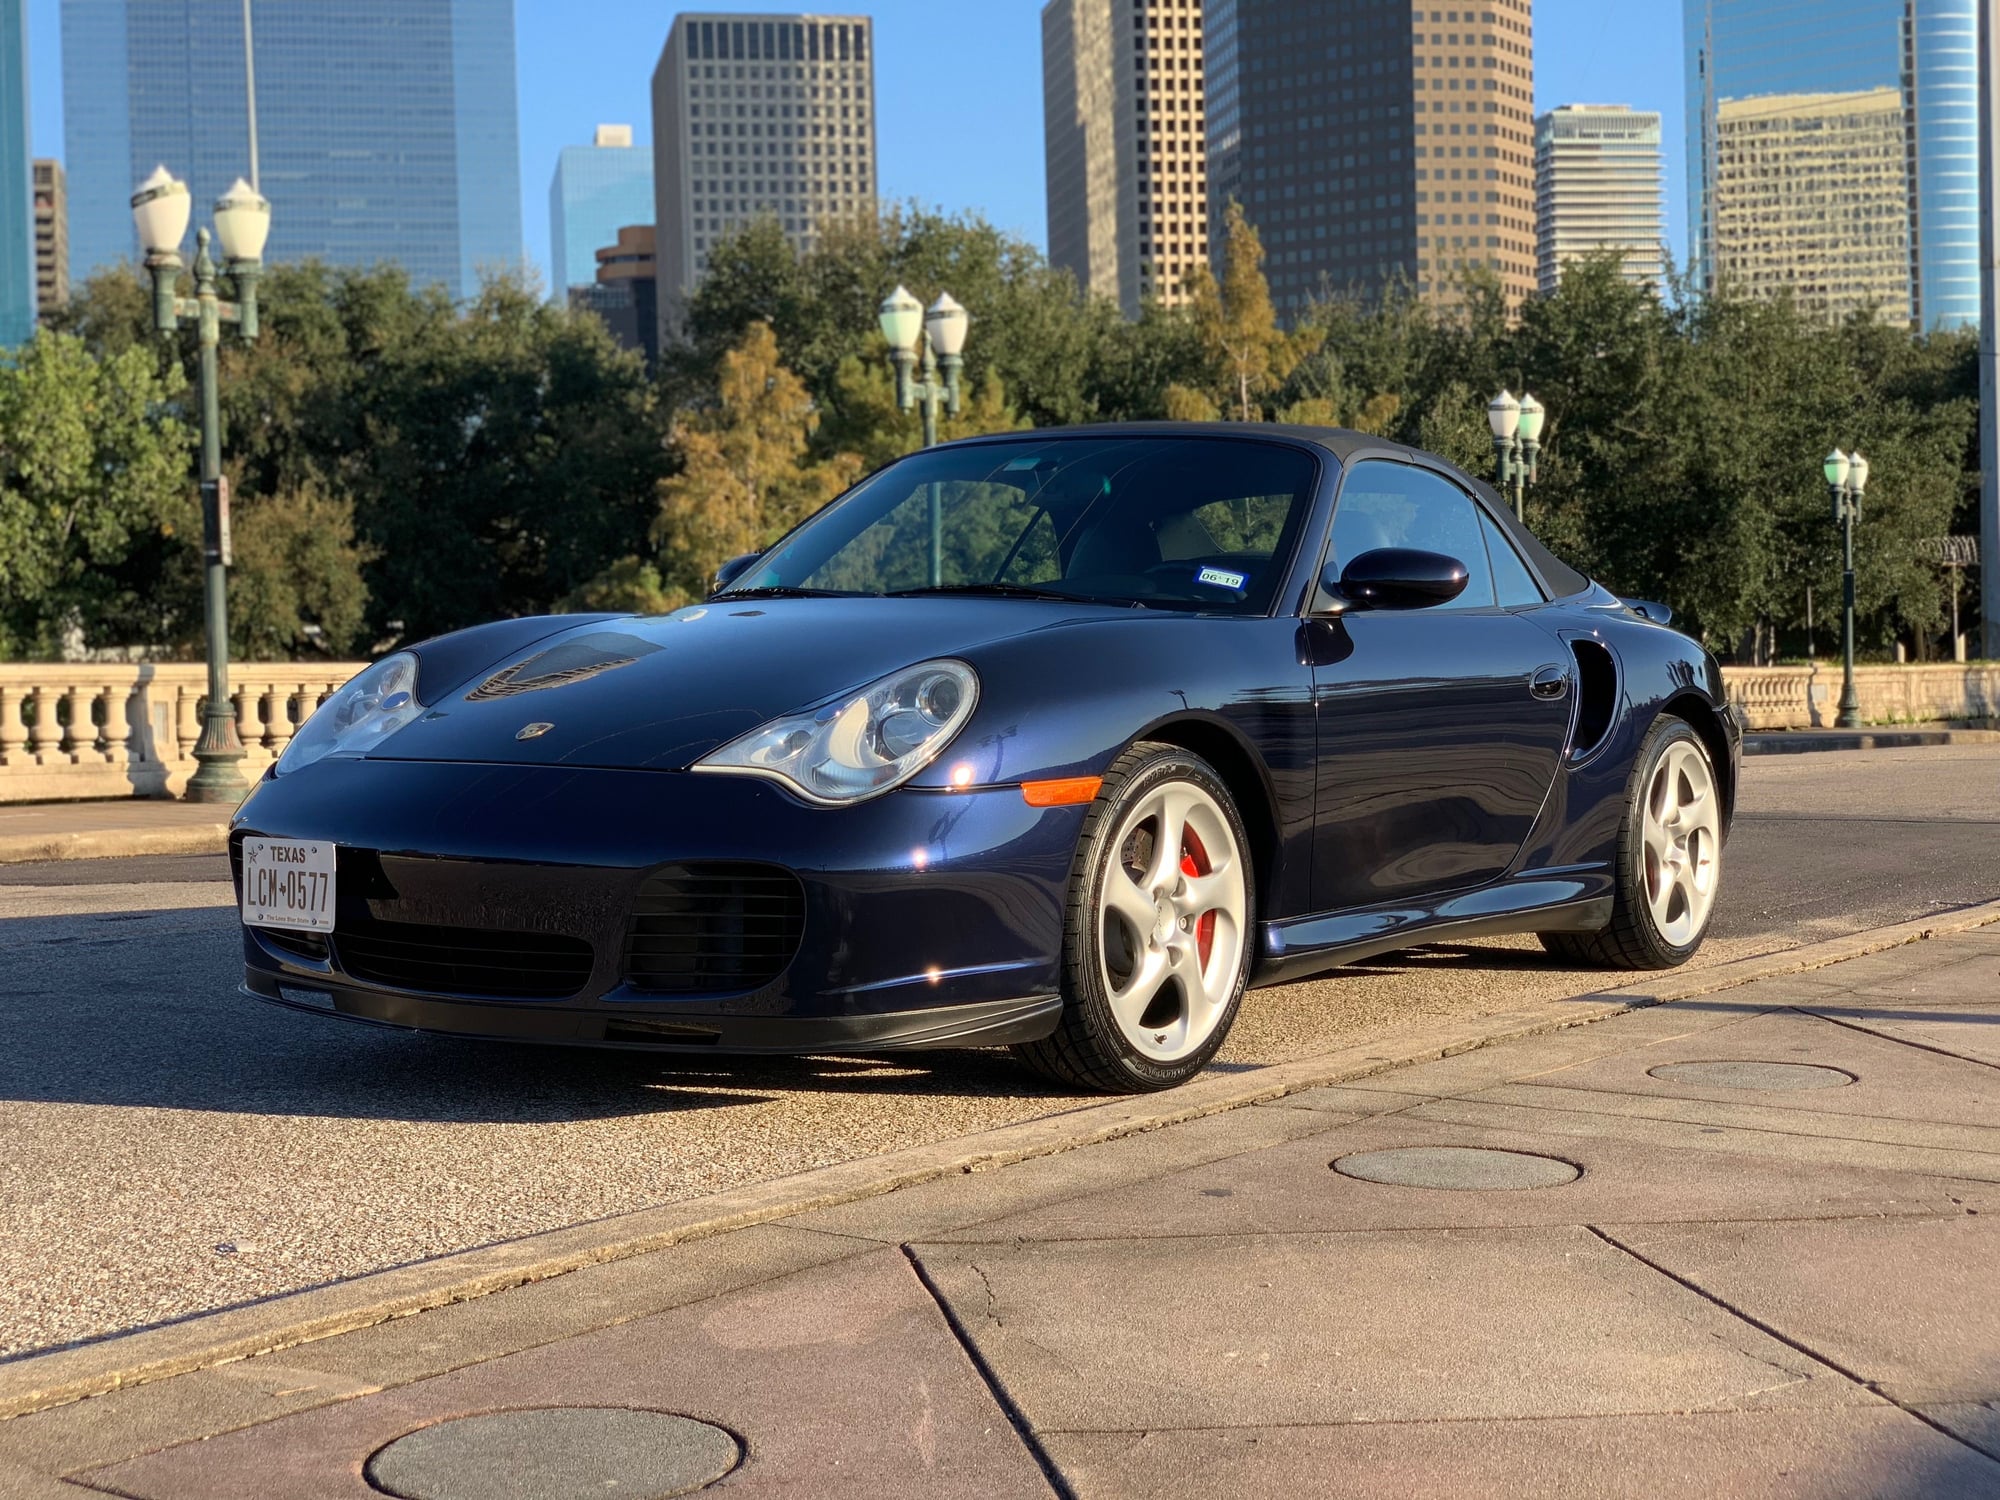 2004 Porsche 911 - 2004 Porsche 911 Turbo (996TT) - Used - VIN WP0CB29964S676435 - 58,500 Miles - 6 cyl - AWD - Manual - Convertible - Blue - Houston, TX 77007, United States